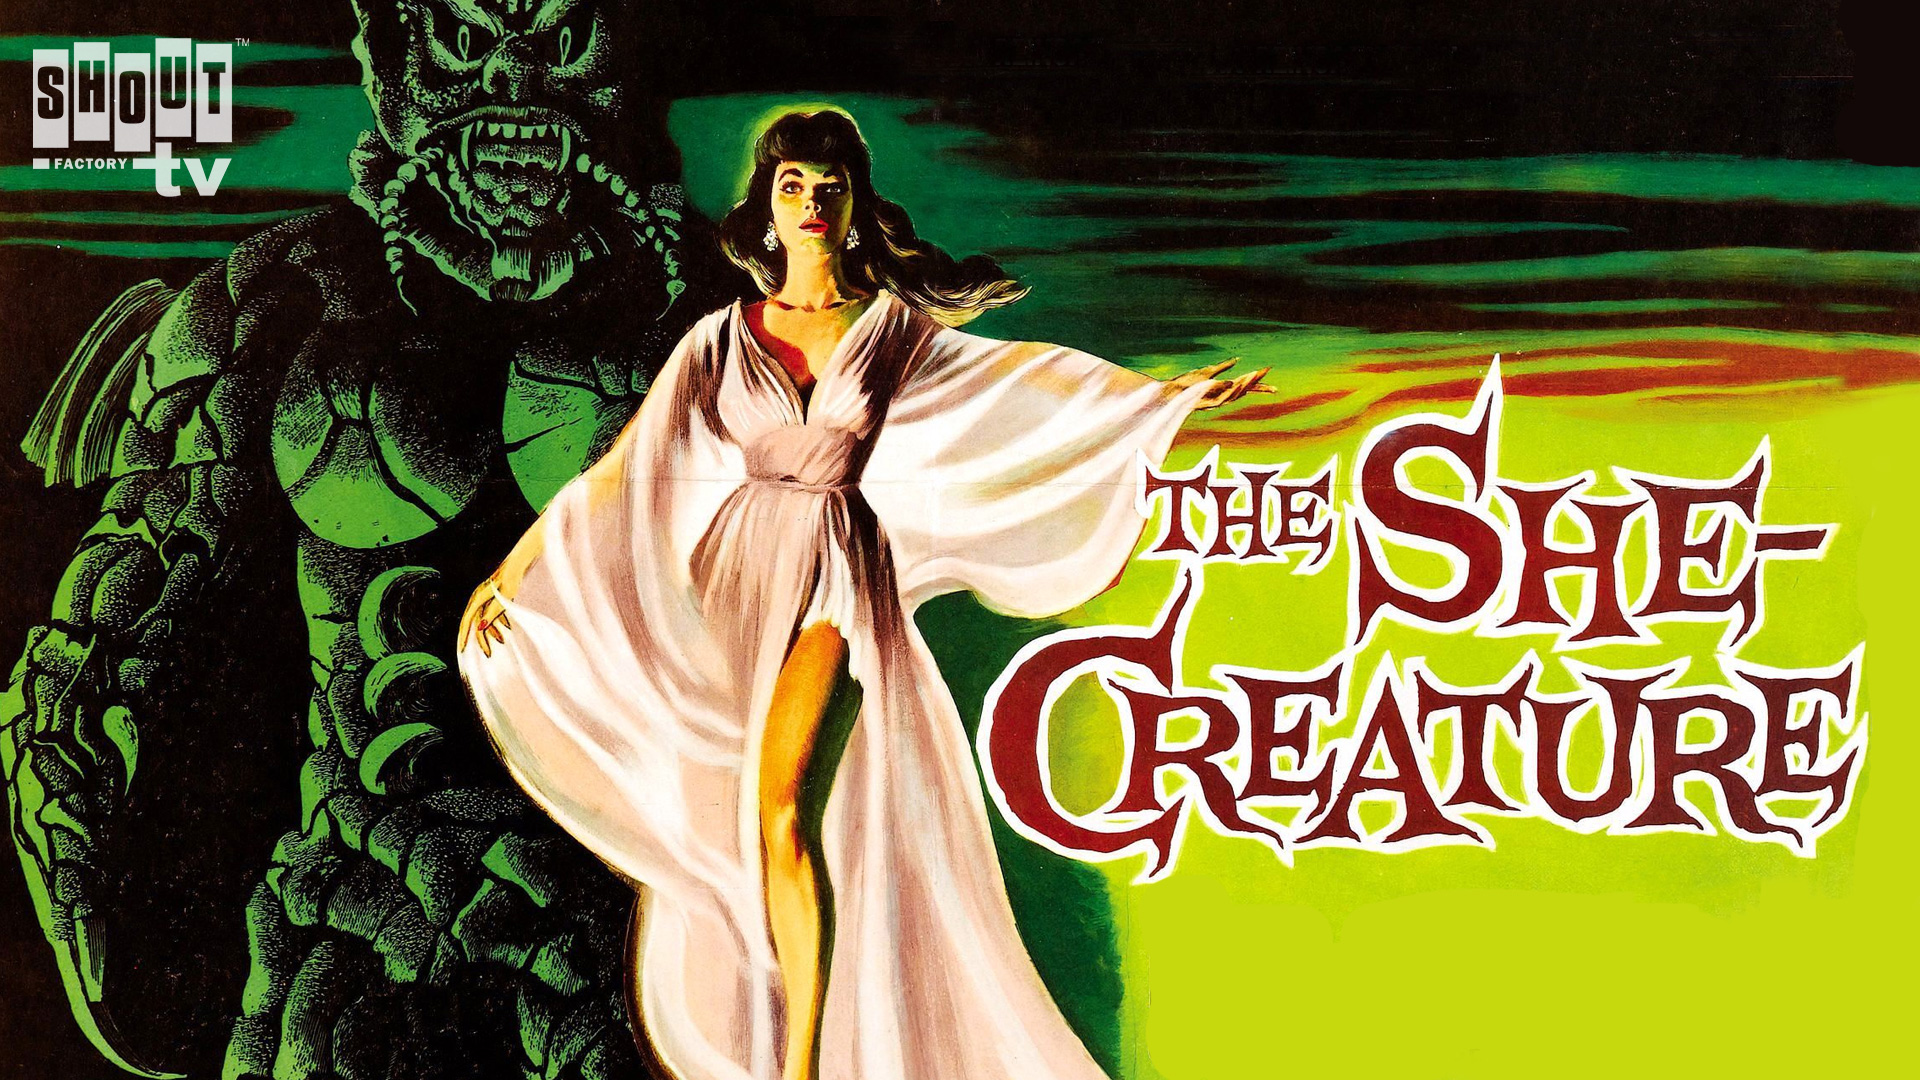 The She Creature - Trailer